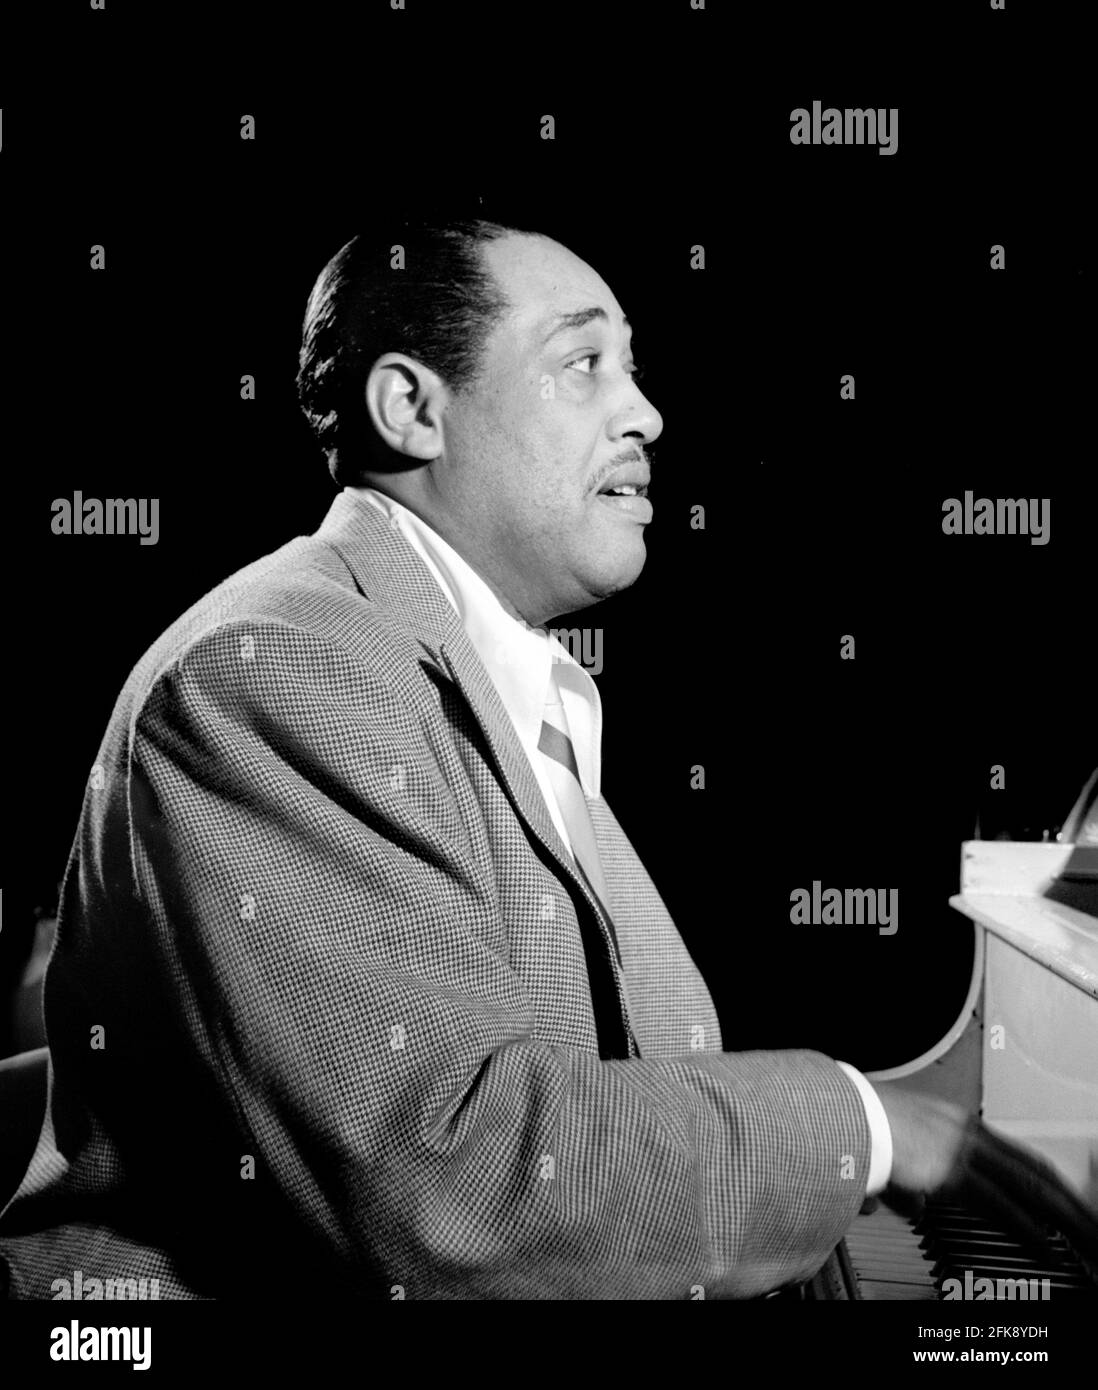 Duke Ellington. Retrato del pianista estadounidense de jazz, Edward Kennedy 'Duke' Ellington (1899-1974) de William P Gottlieb, 1946 Foto de stock